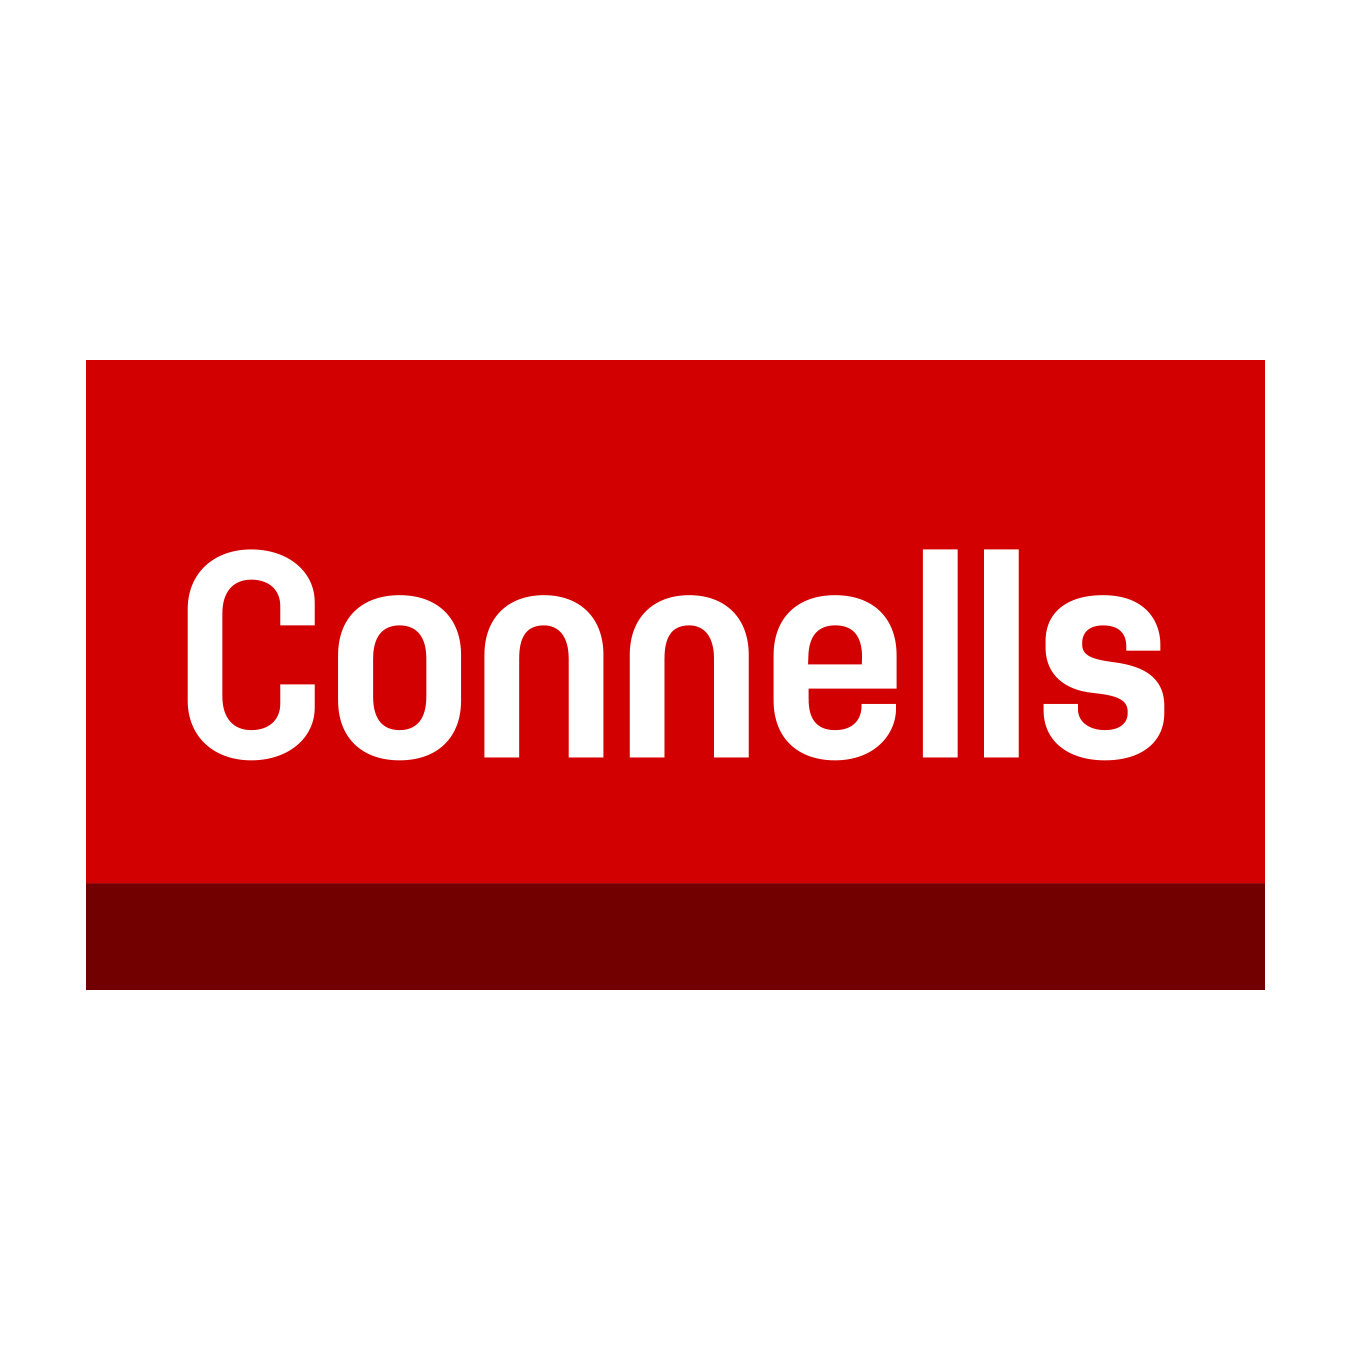 Connells Ltd